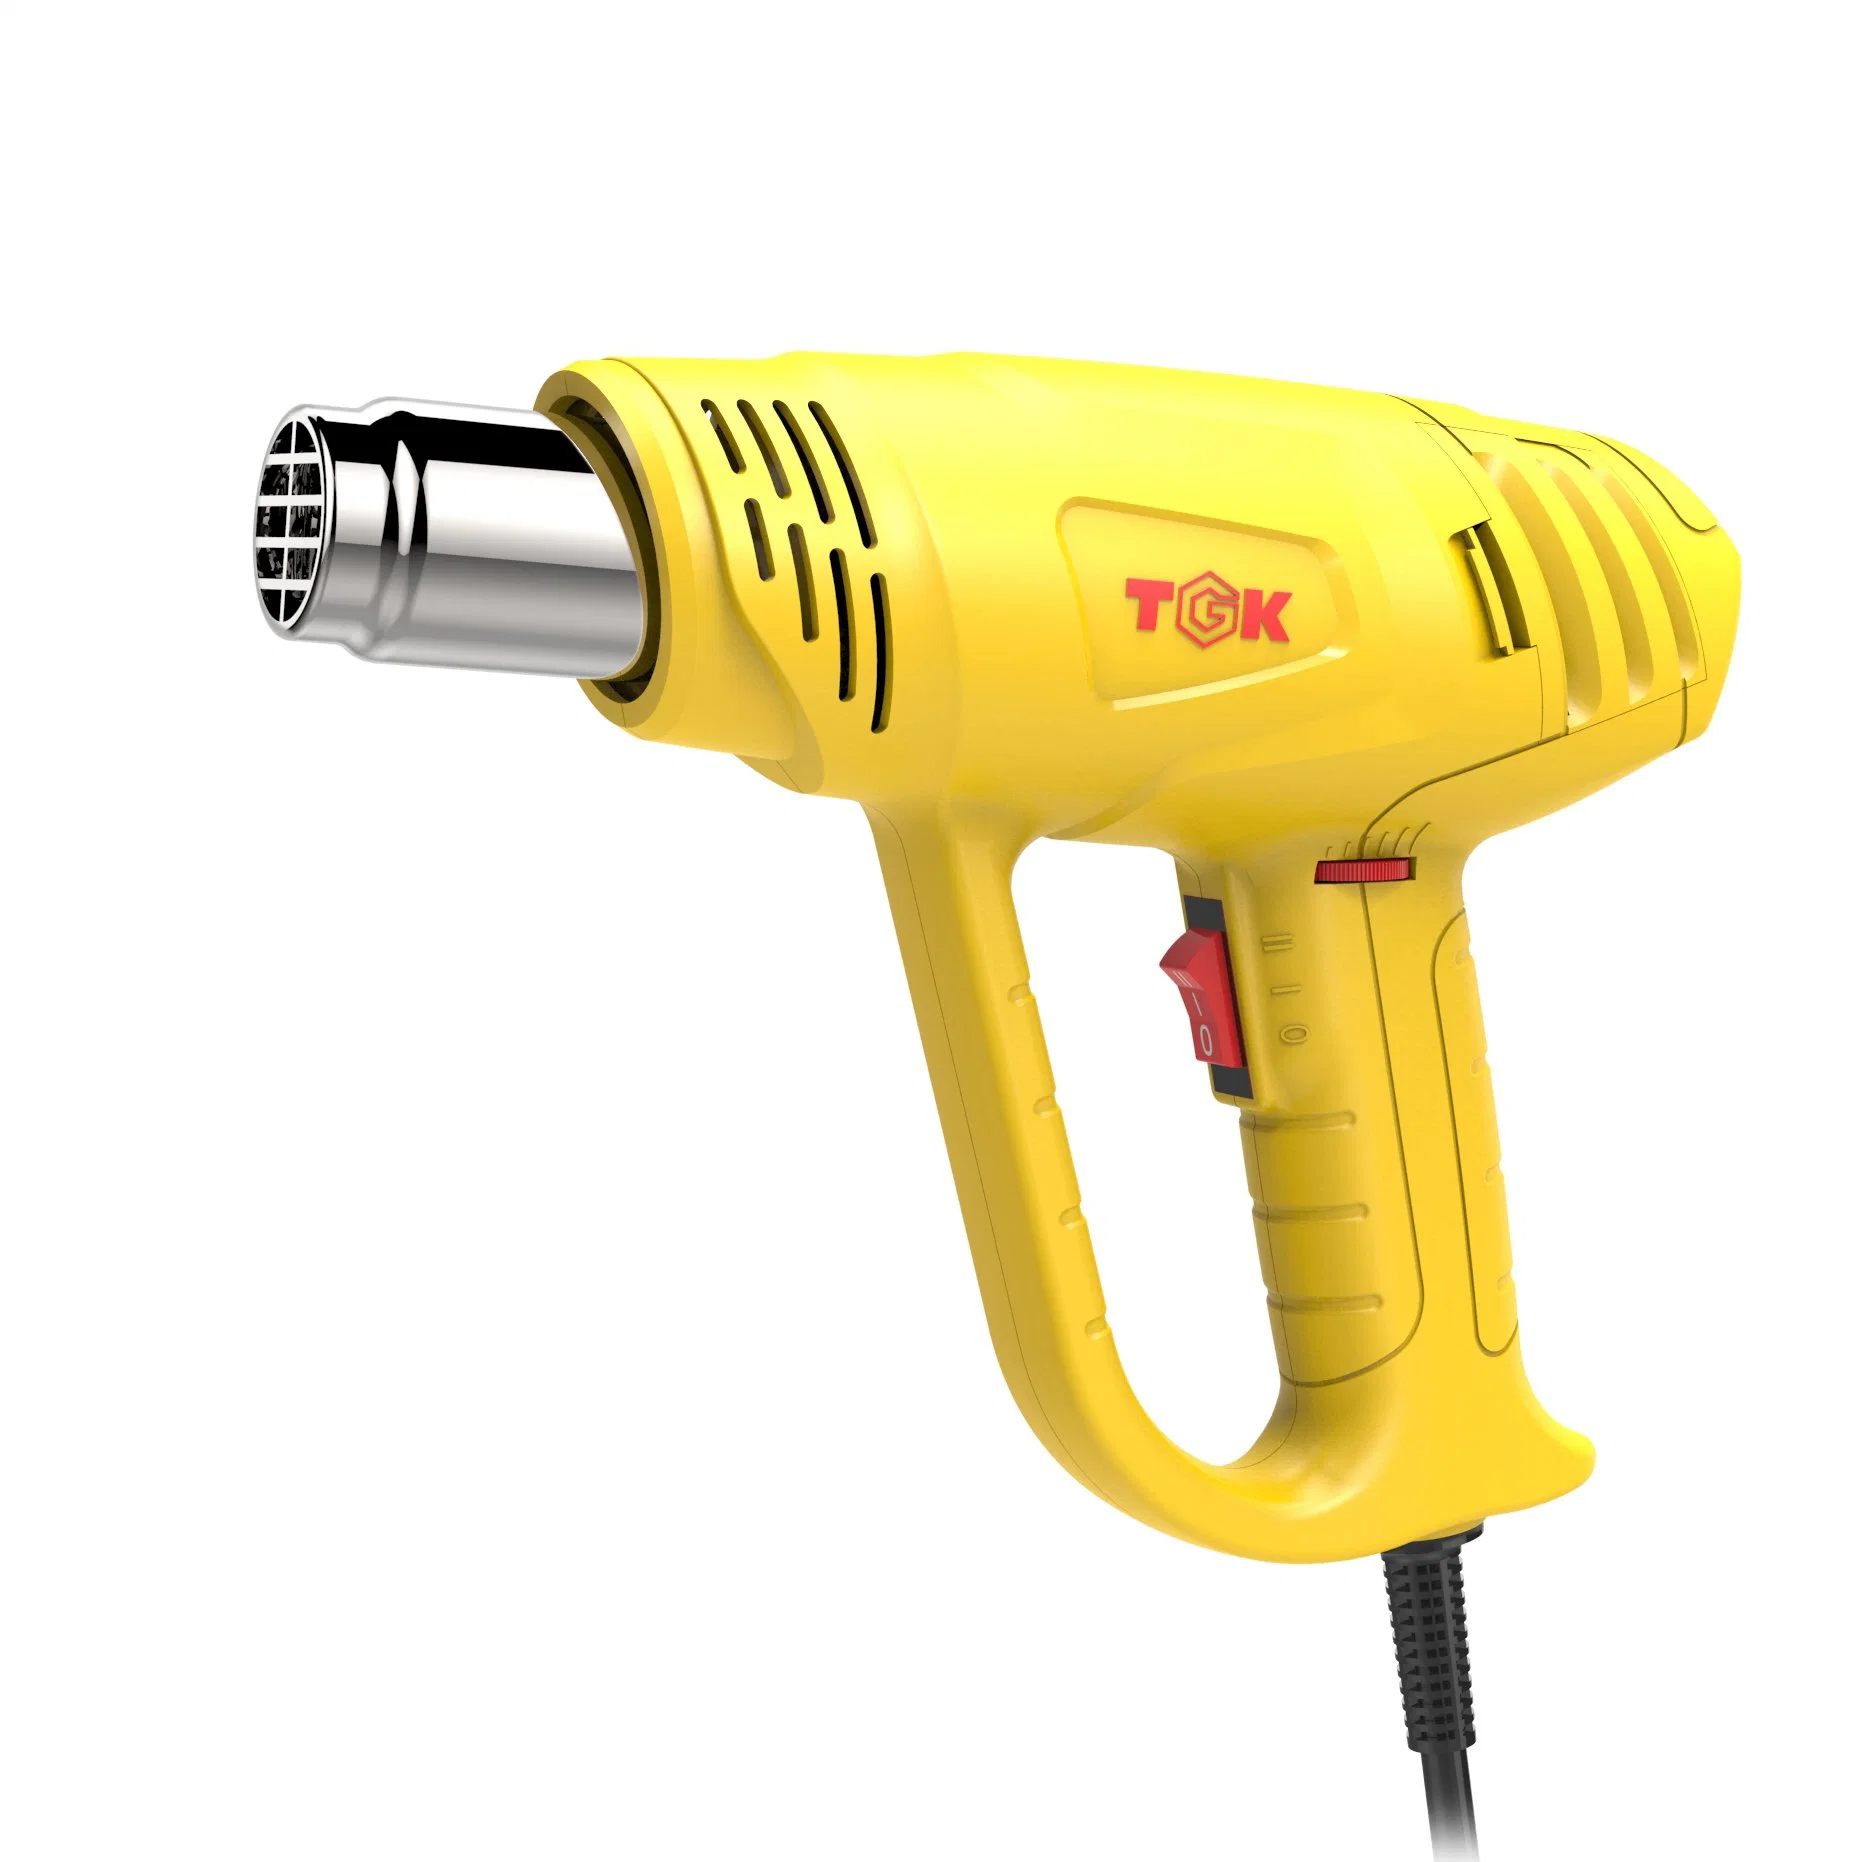 Shrink Wrap Heat Gun Helps Speed Paint Drying Hg5520